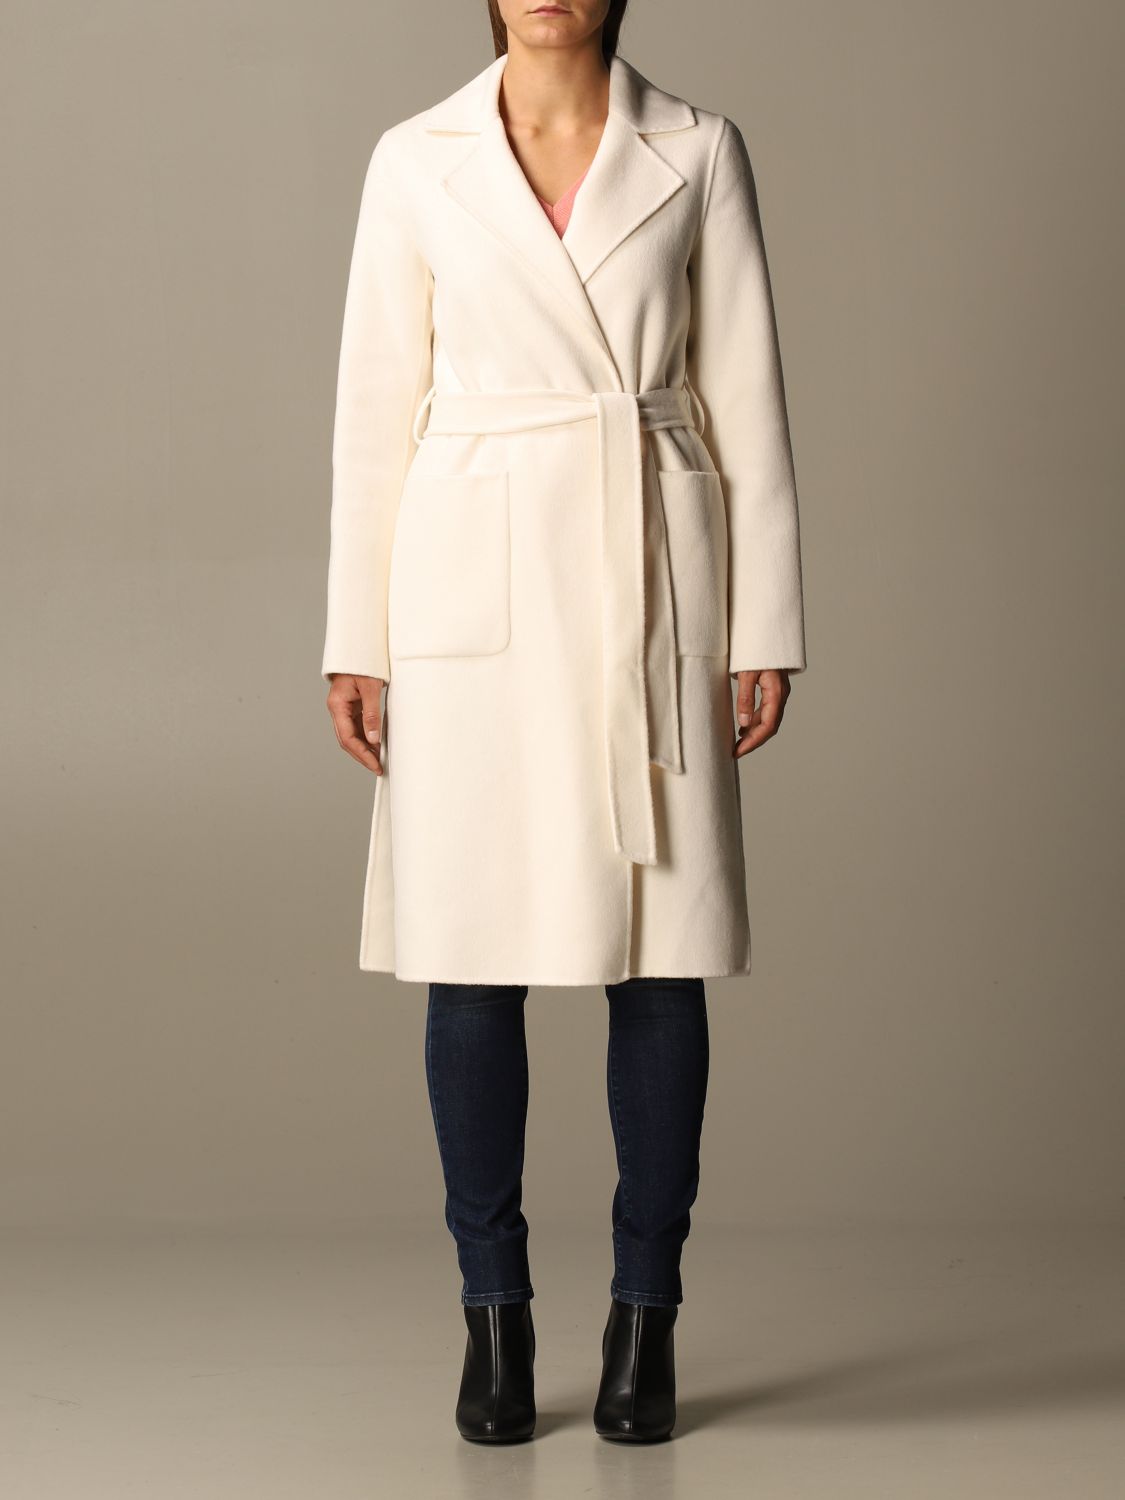 MICHAEL MICHAEL KORS: wrap coat | Coat 